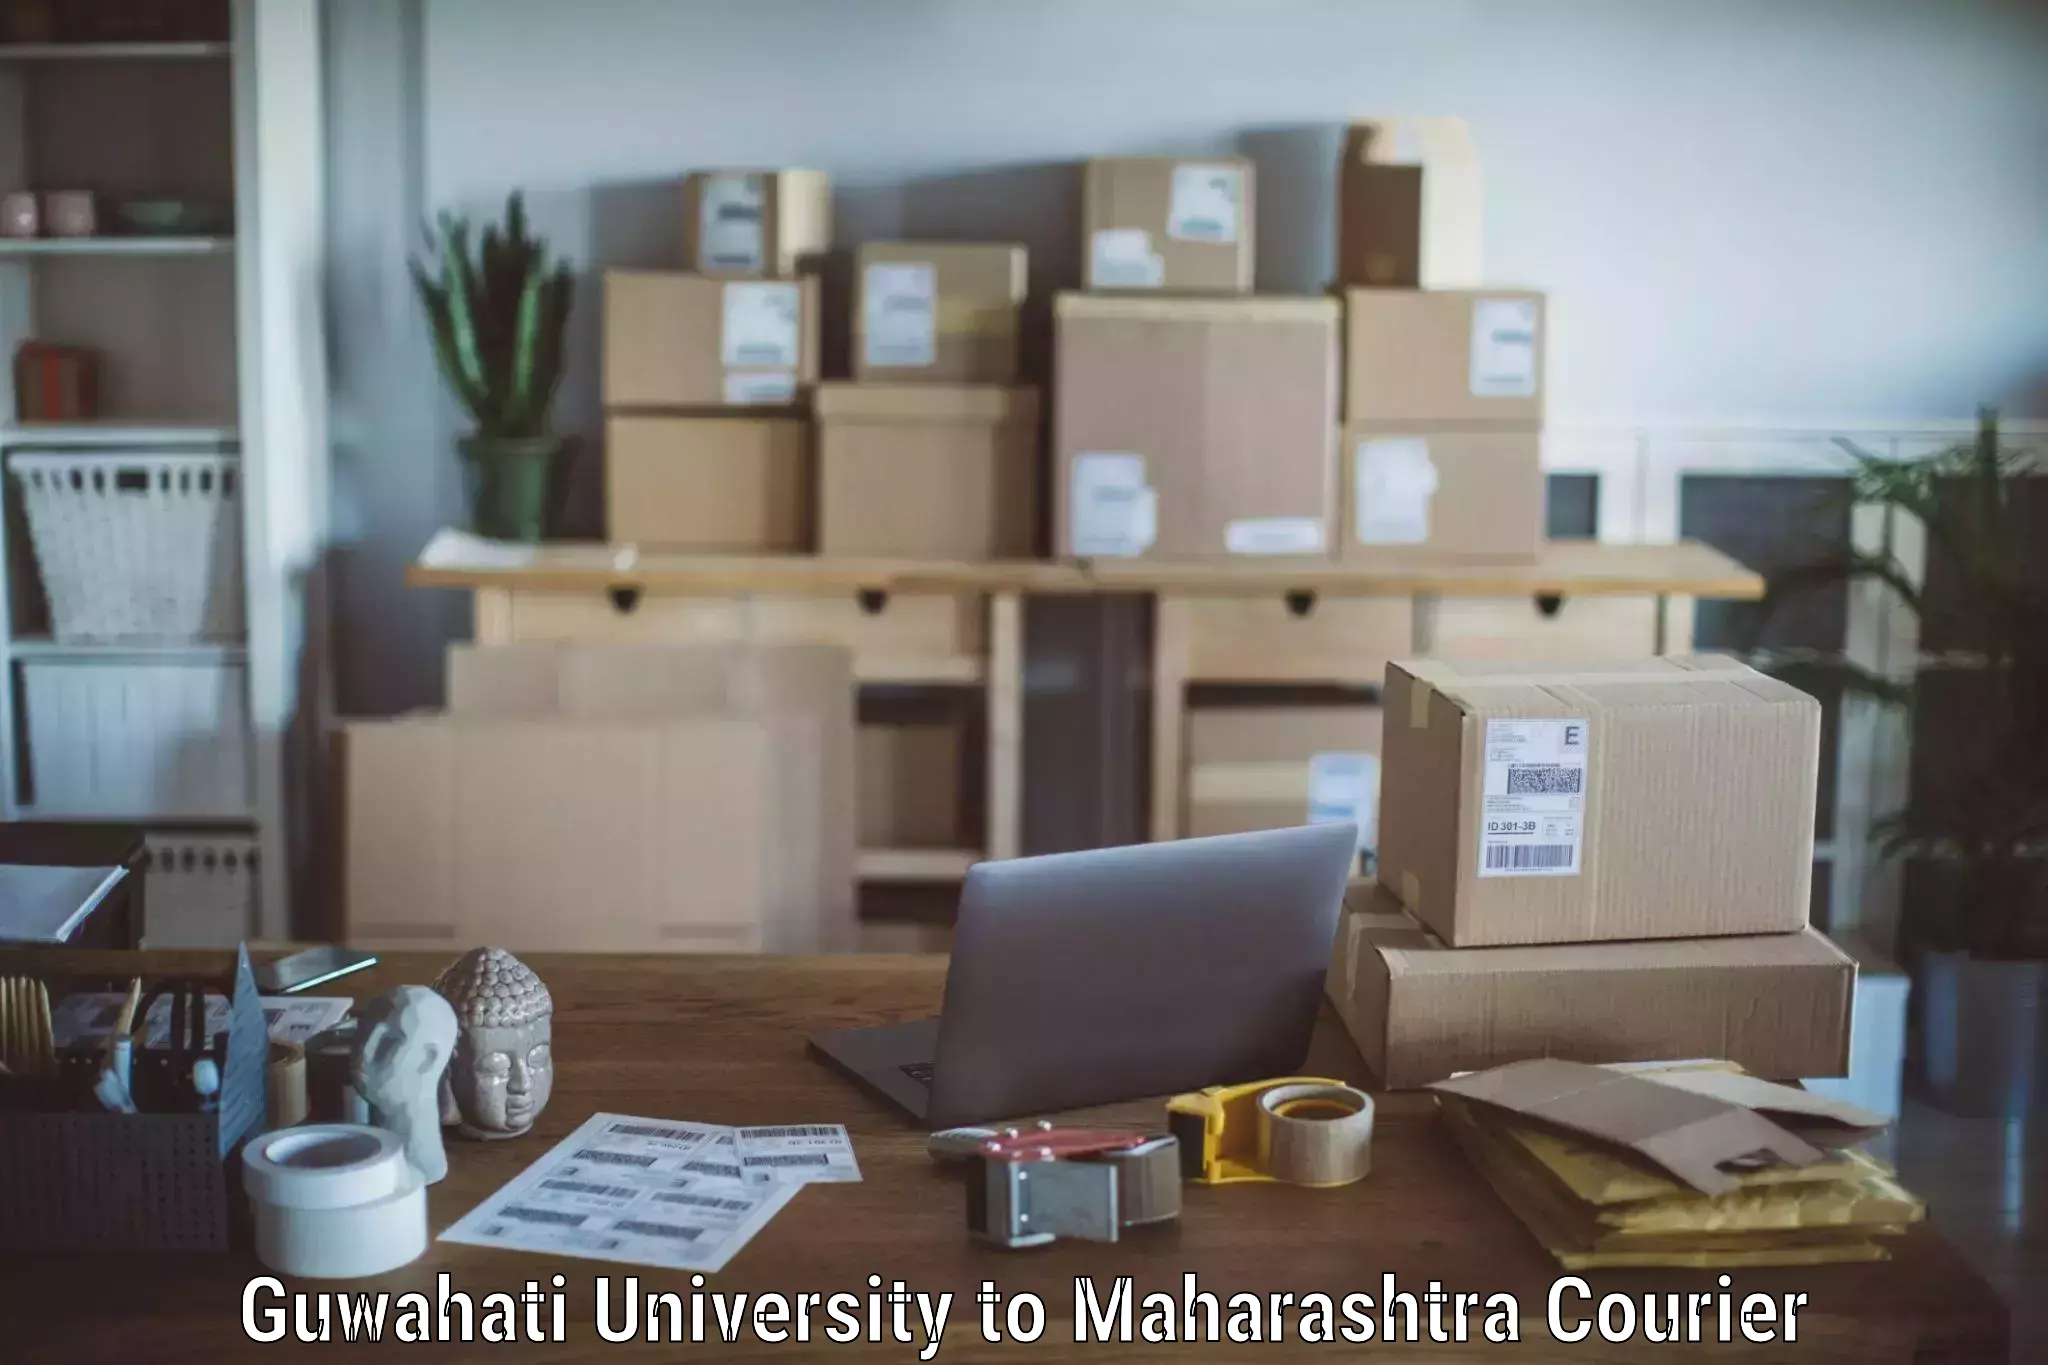 Quality moving company Guwahati University to Ahmedpur